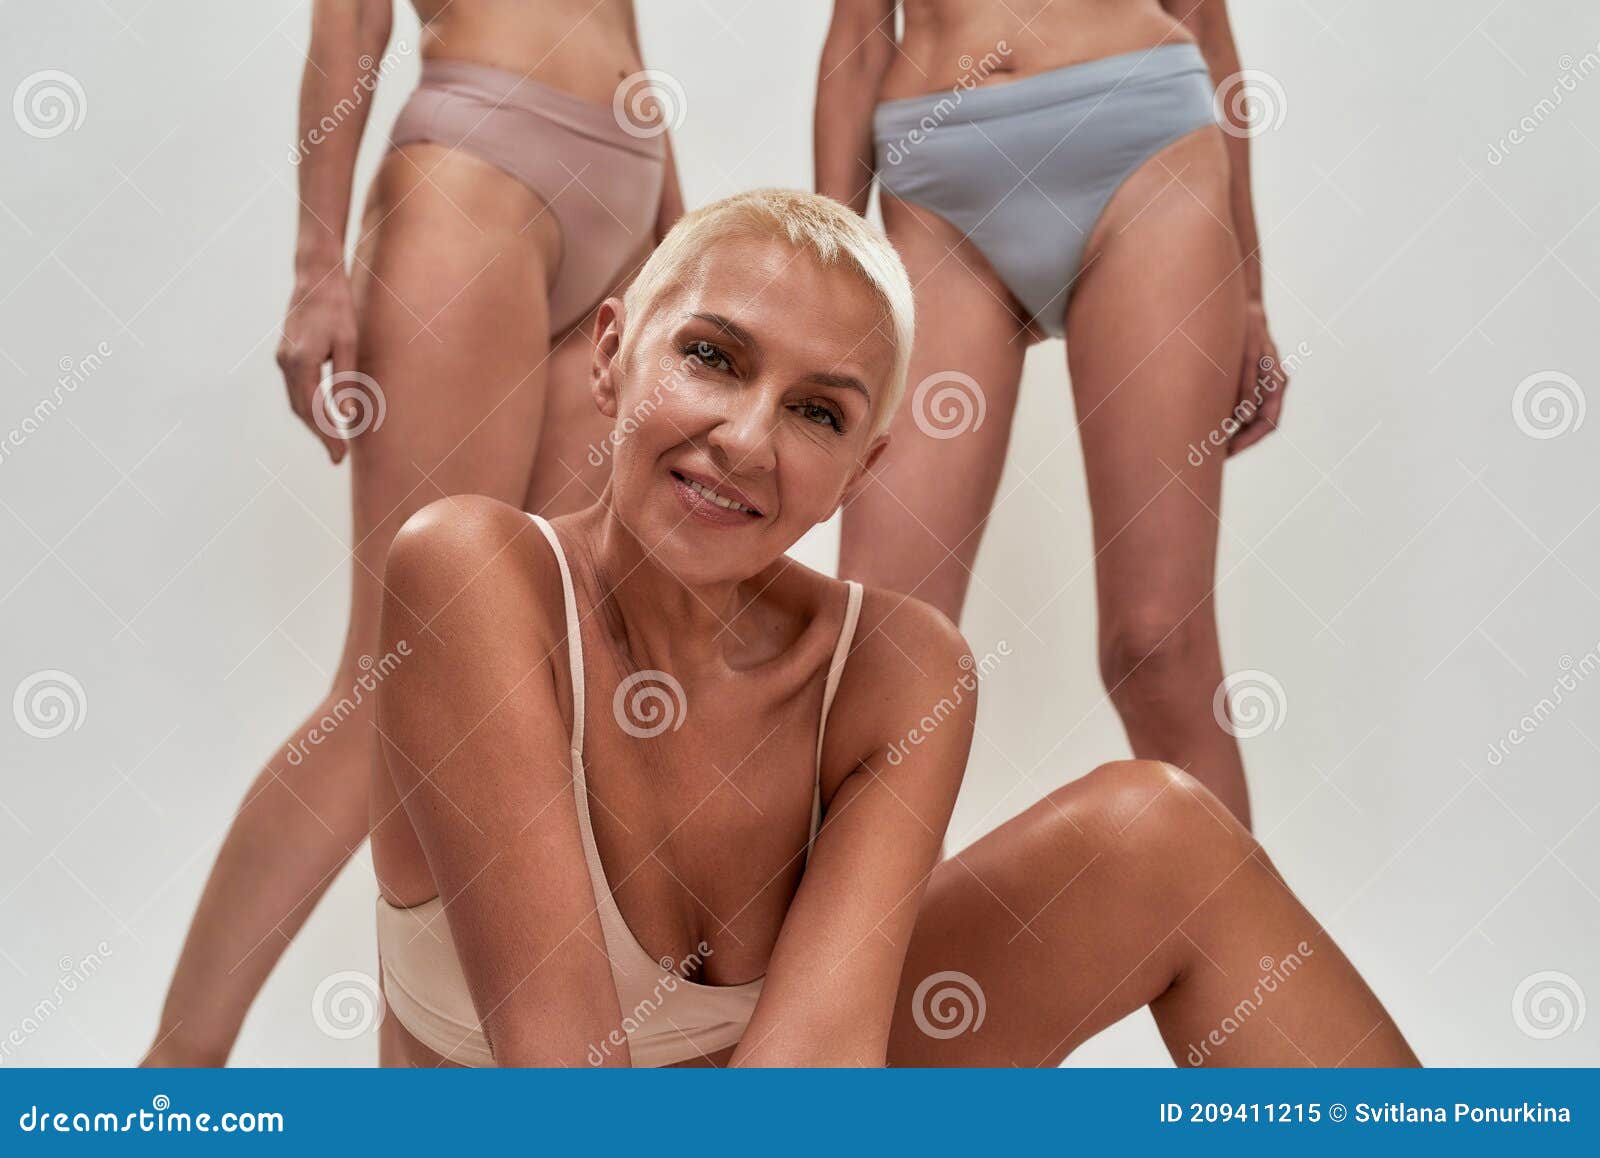 Portrait of Sensual Caucasian Senior Woman with Short Hair Wearing Underwear Smiling at Camera while Posing Half Naked Stock Image